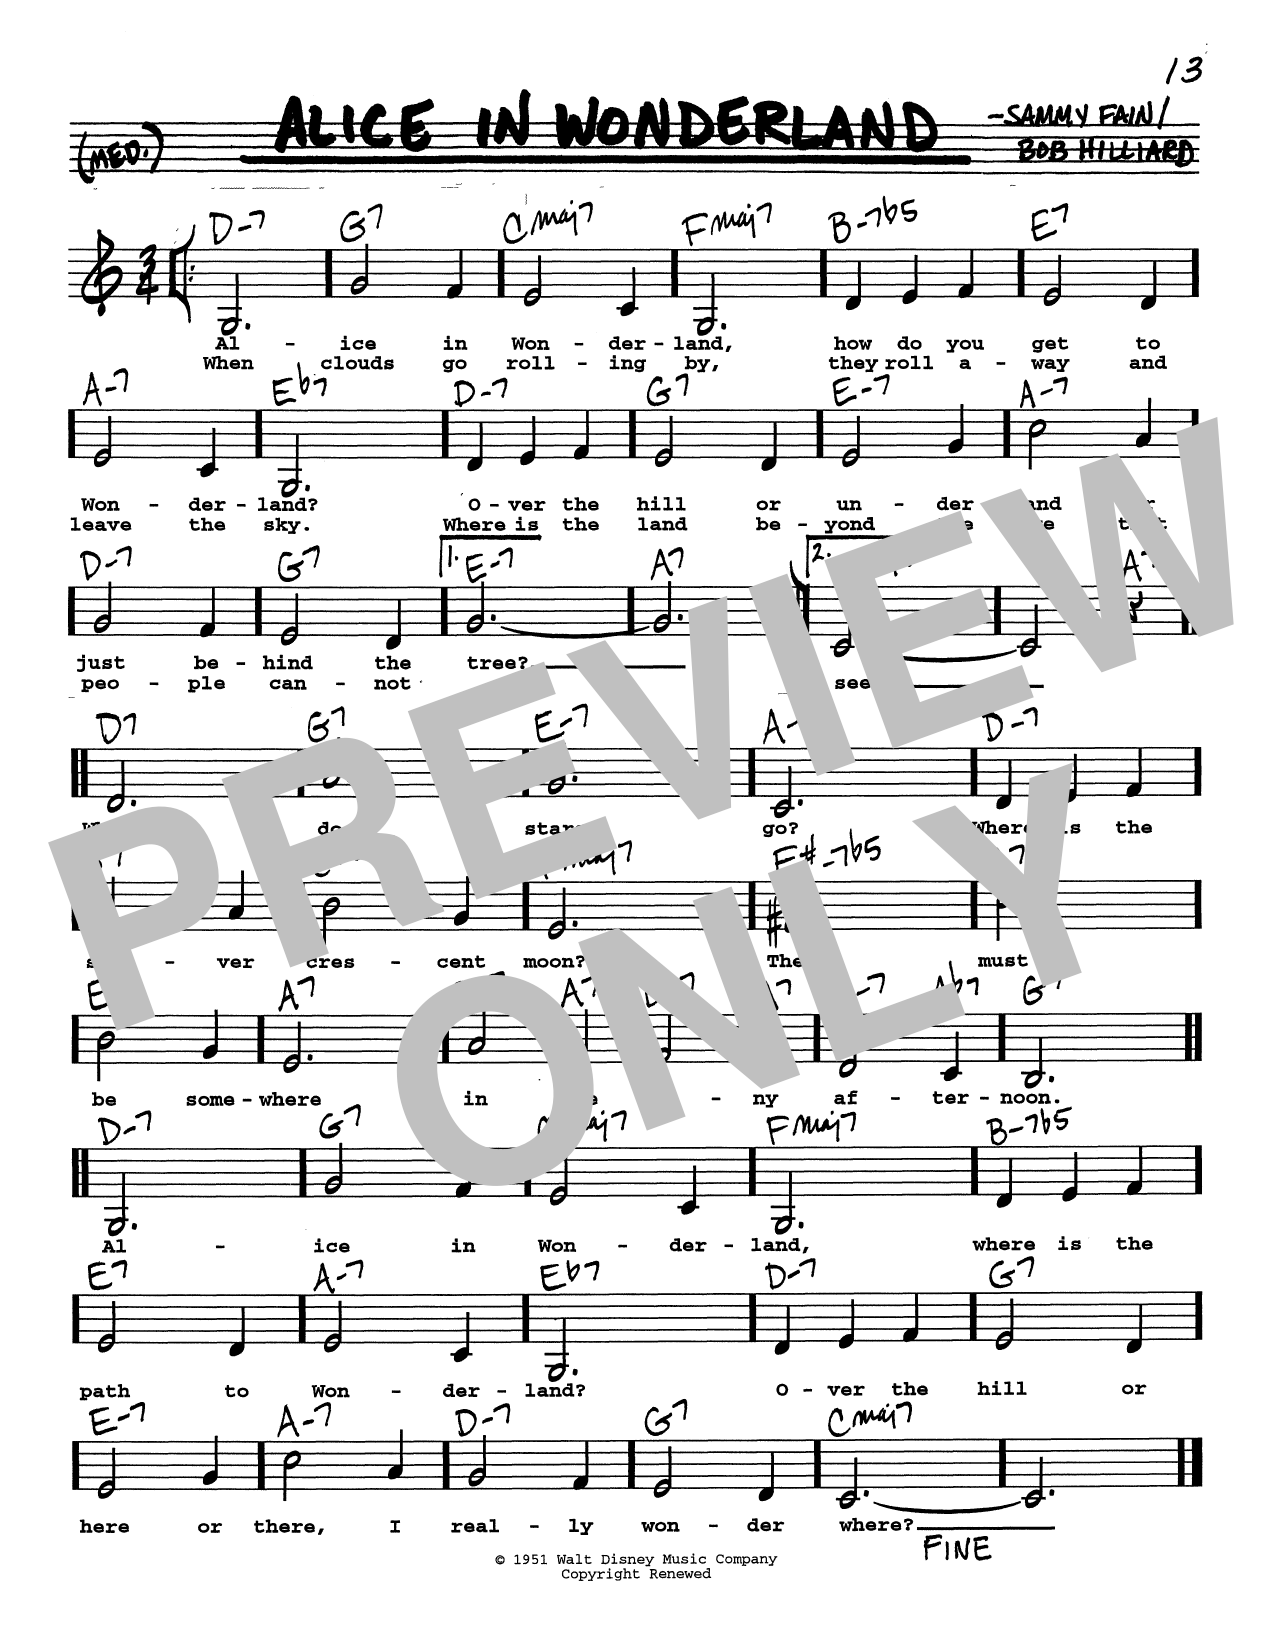 Sammy Fain Alice In Wonderland (Low Voice) sheet music notes printable PDF score